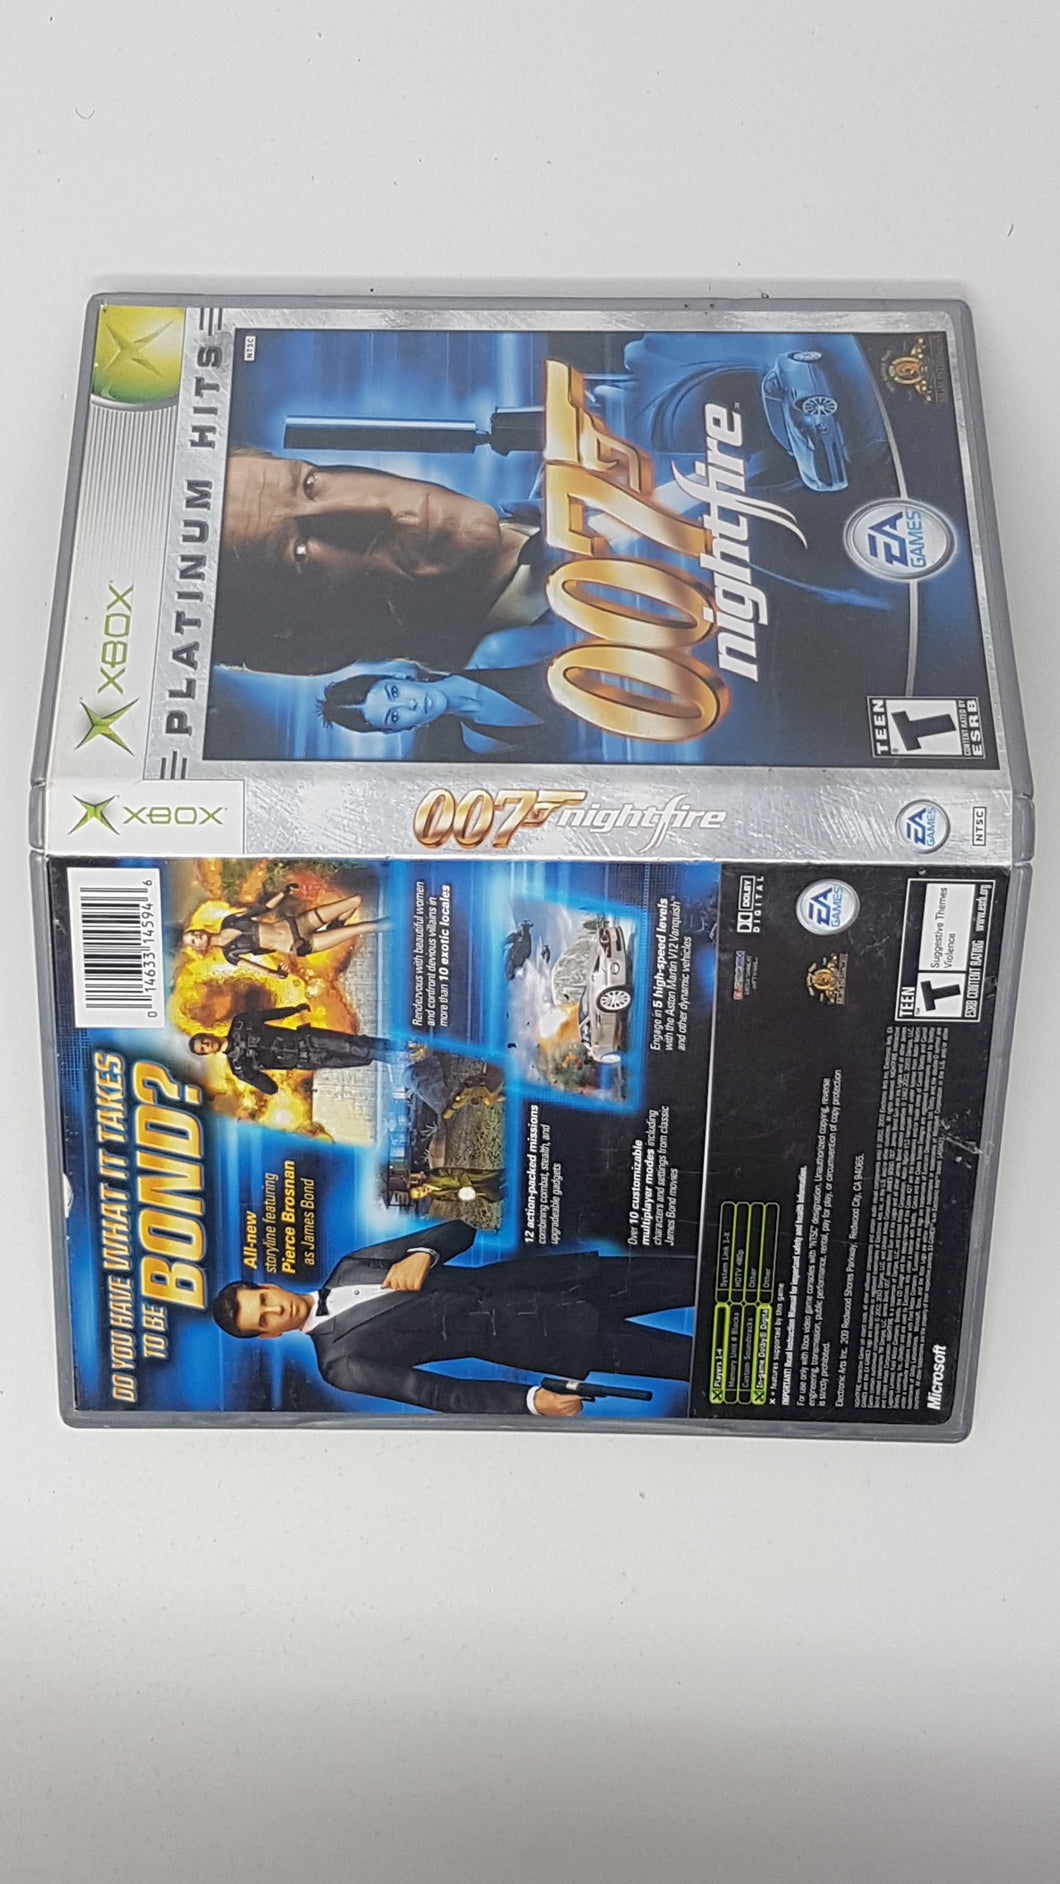 007 Nightfire [Palmarès Platine] [boîte] - Microsoft Xbox